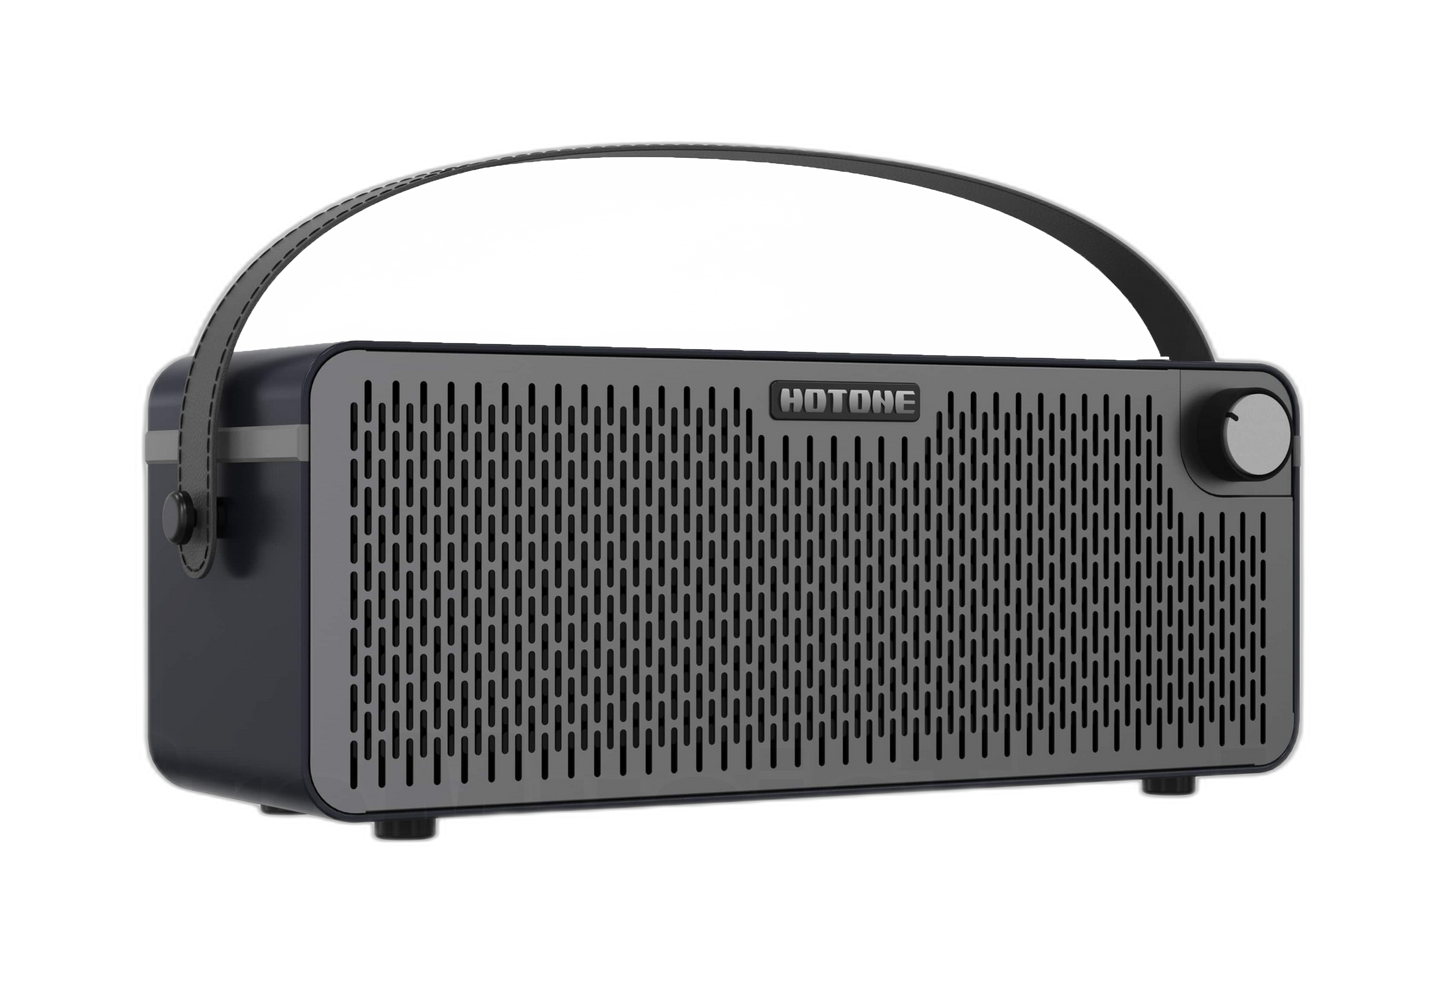 Hotone Pulze AP30BK Multifunctional Modern Bluetooth Modeling Amplifier Black Edition 30 Watts